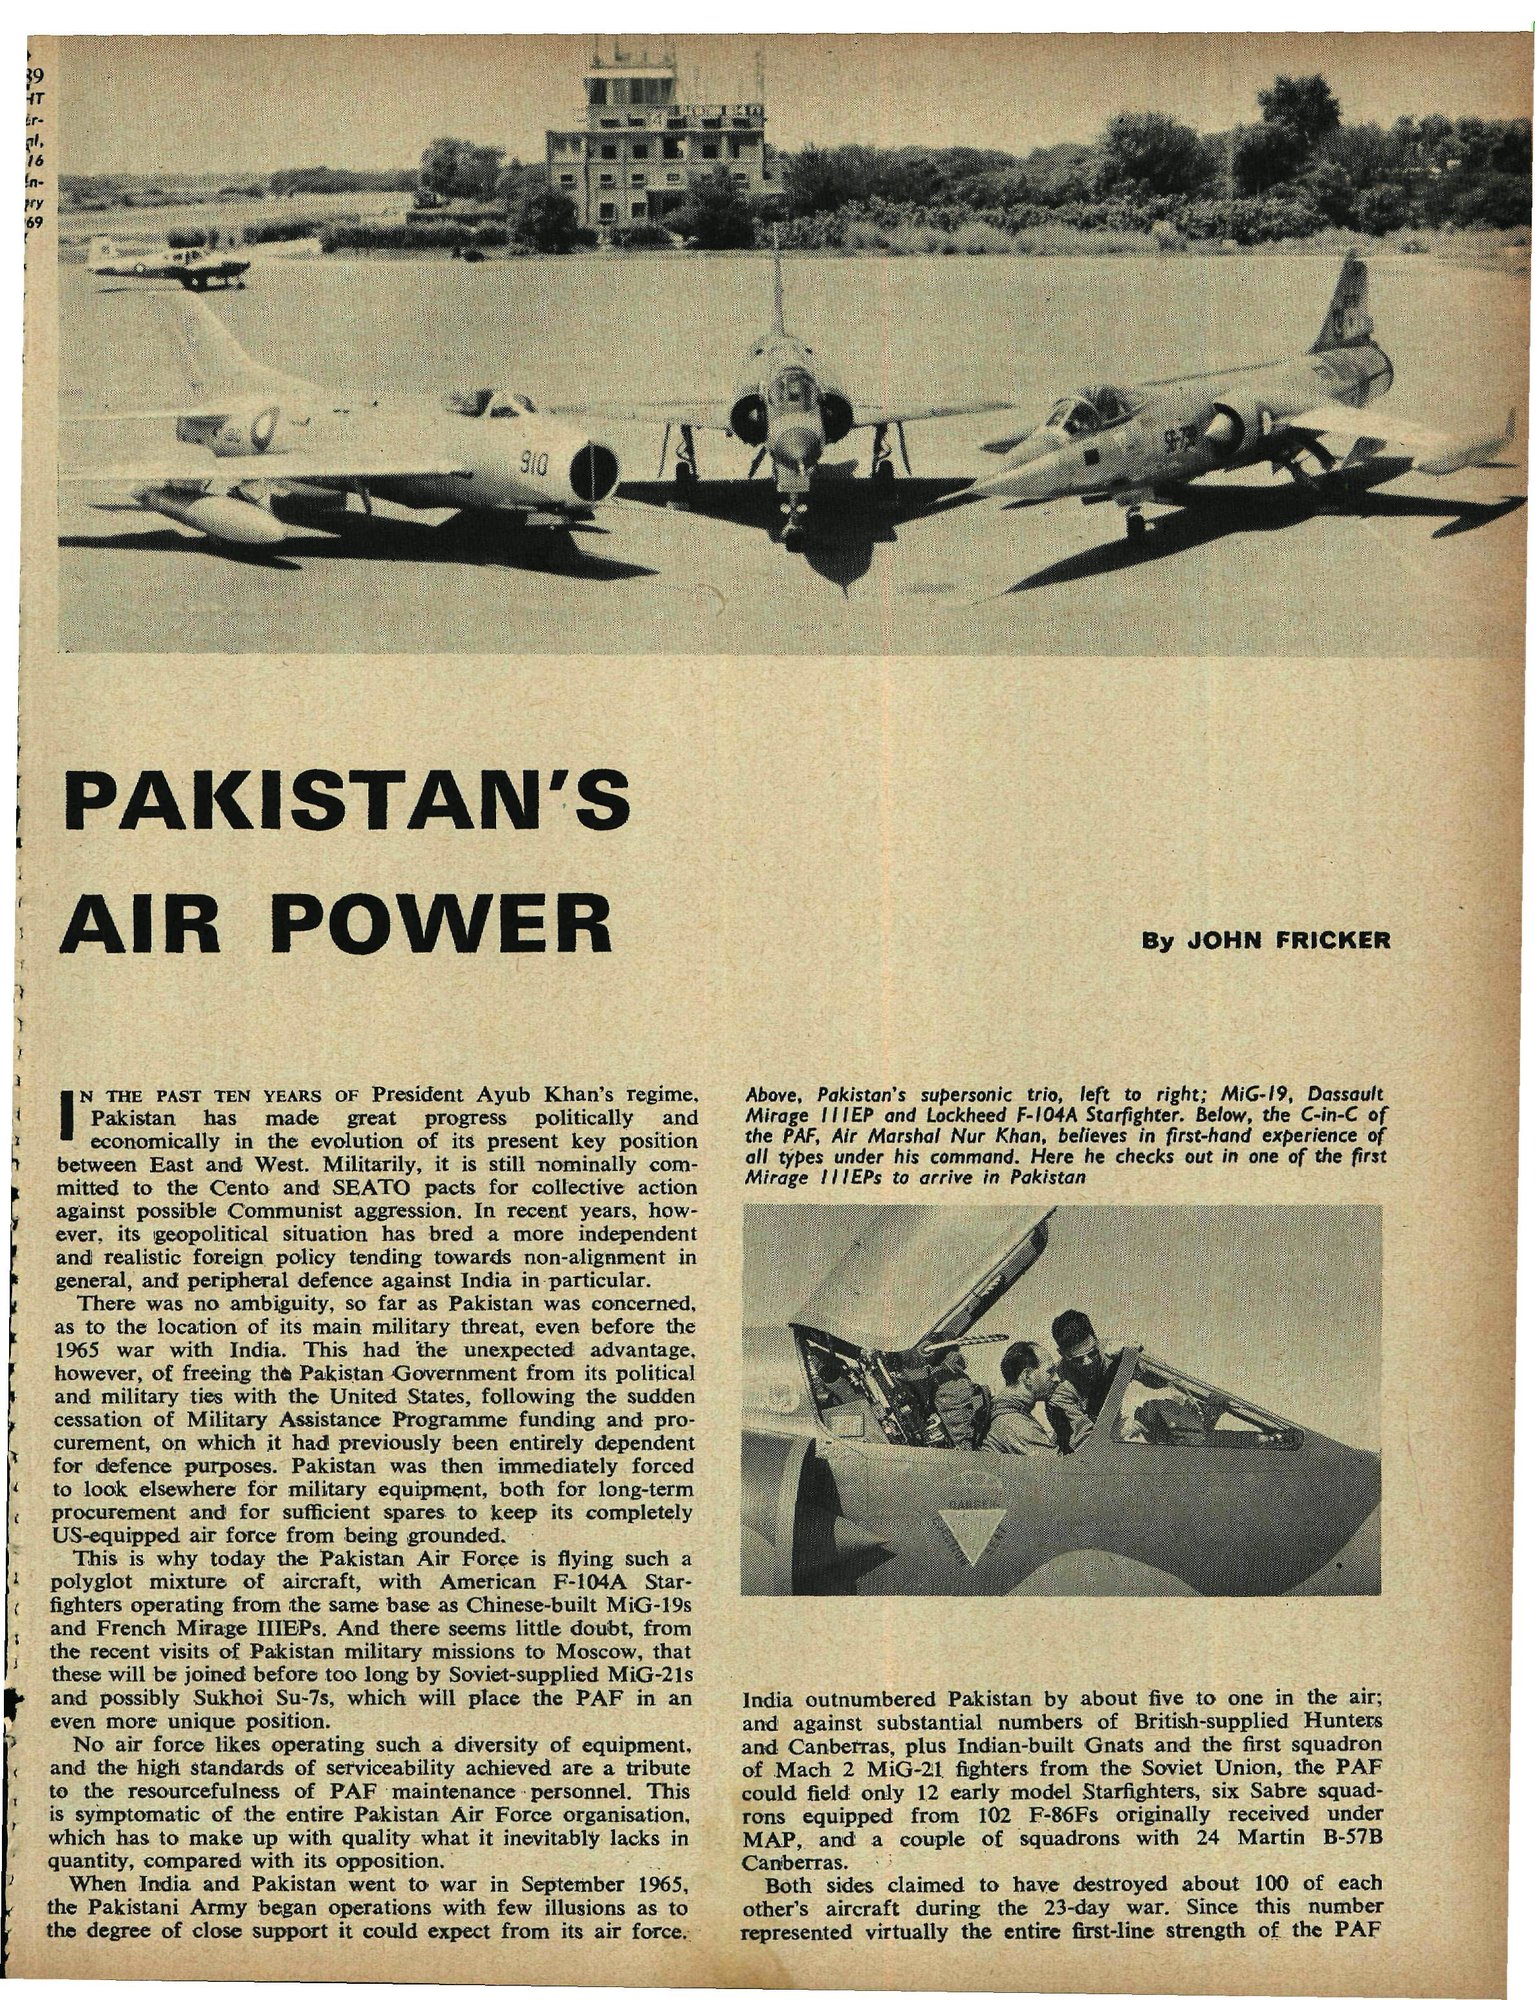 PAKISTAN'S AIR POWER-FLIGHT International, 16 January 1969-1(a).jpg